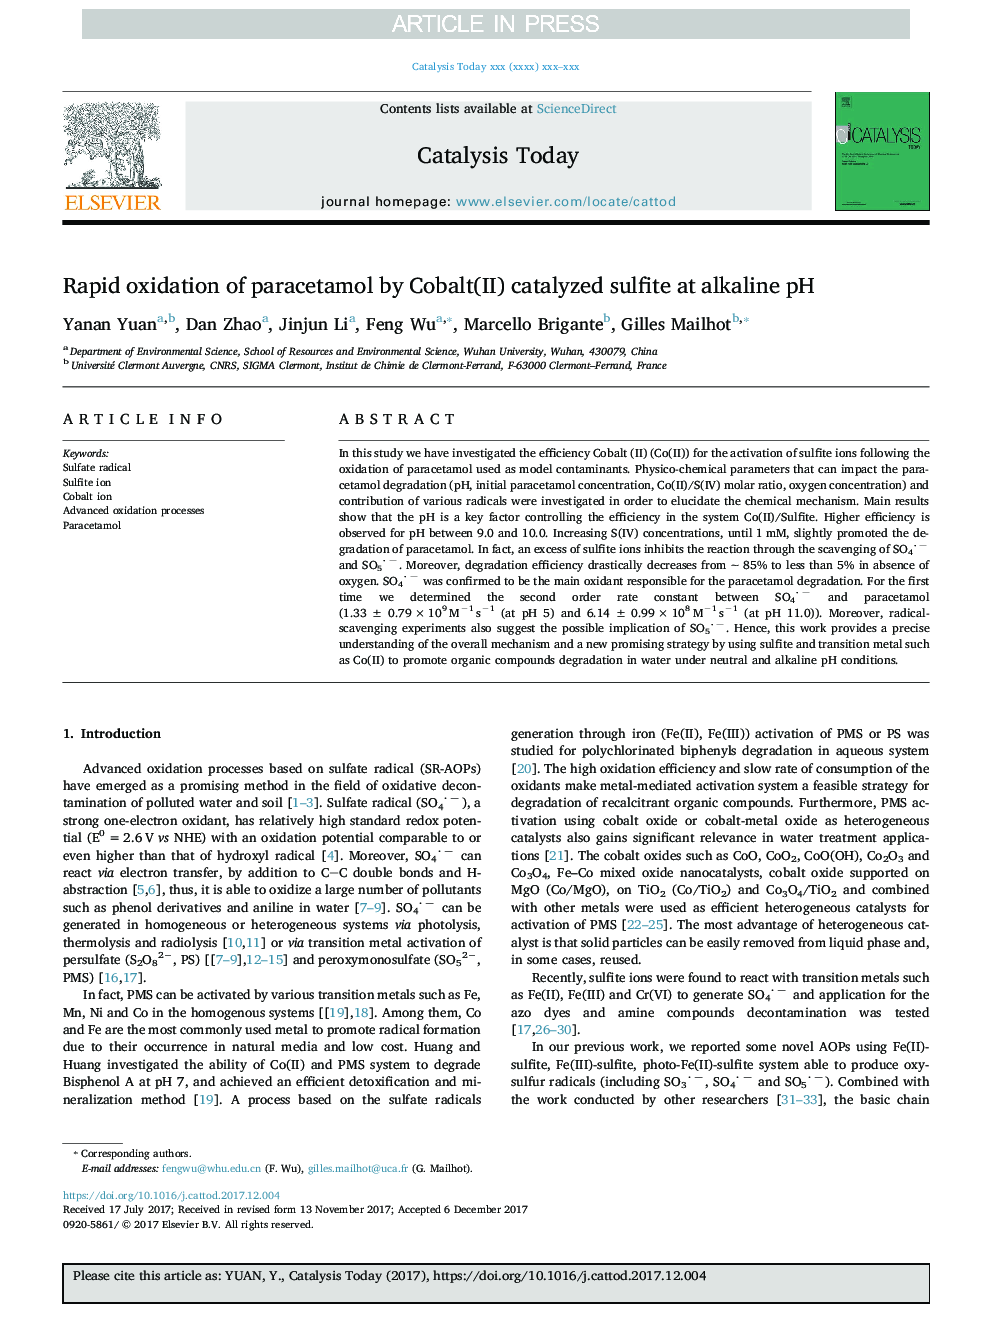 Rapid oxidation of paracetamol by Cobalt(II) catalyzed sulfite at alkaline pH